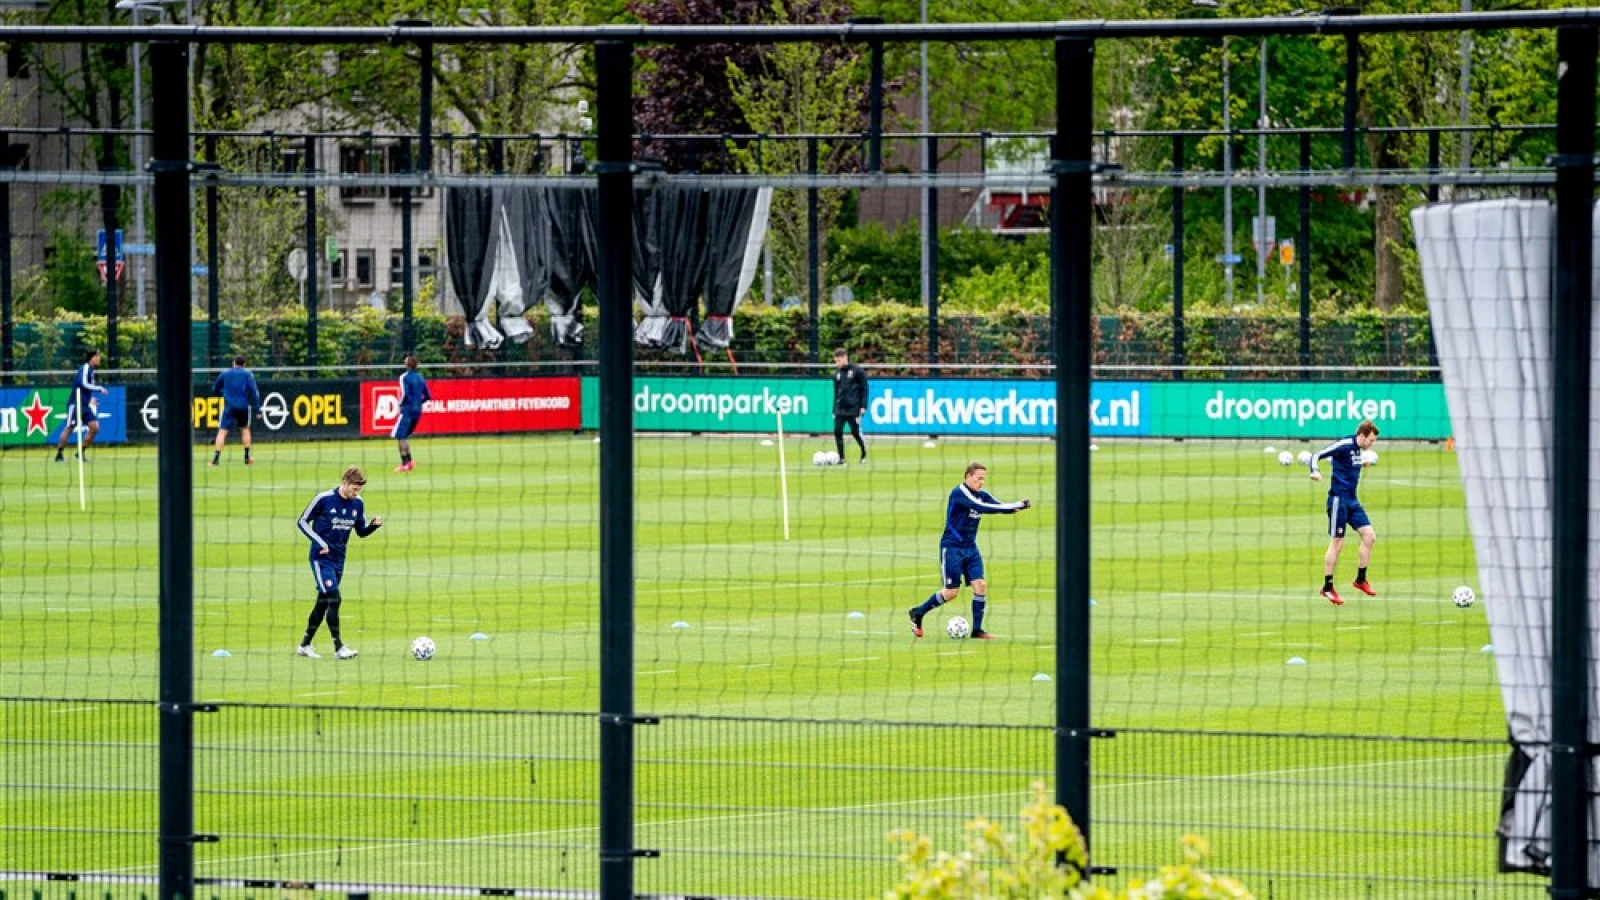 VIDEO | Feyenoord is weer in kleine groepjes begonnen met trainen